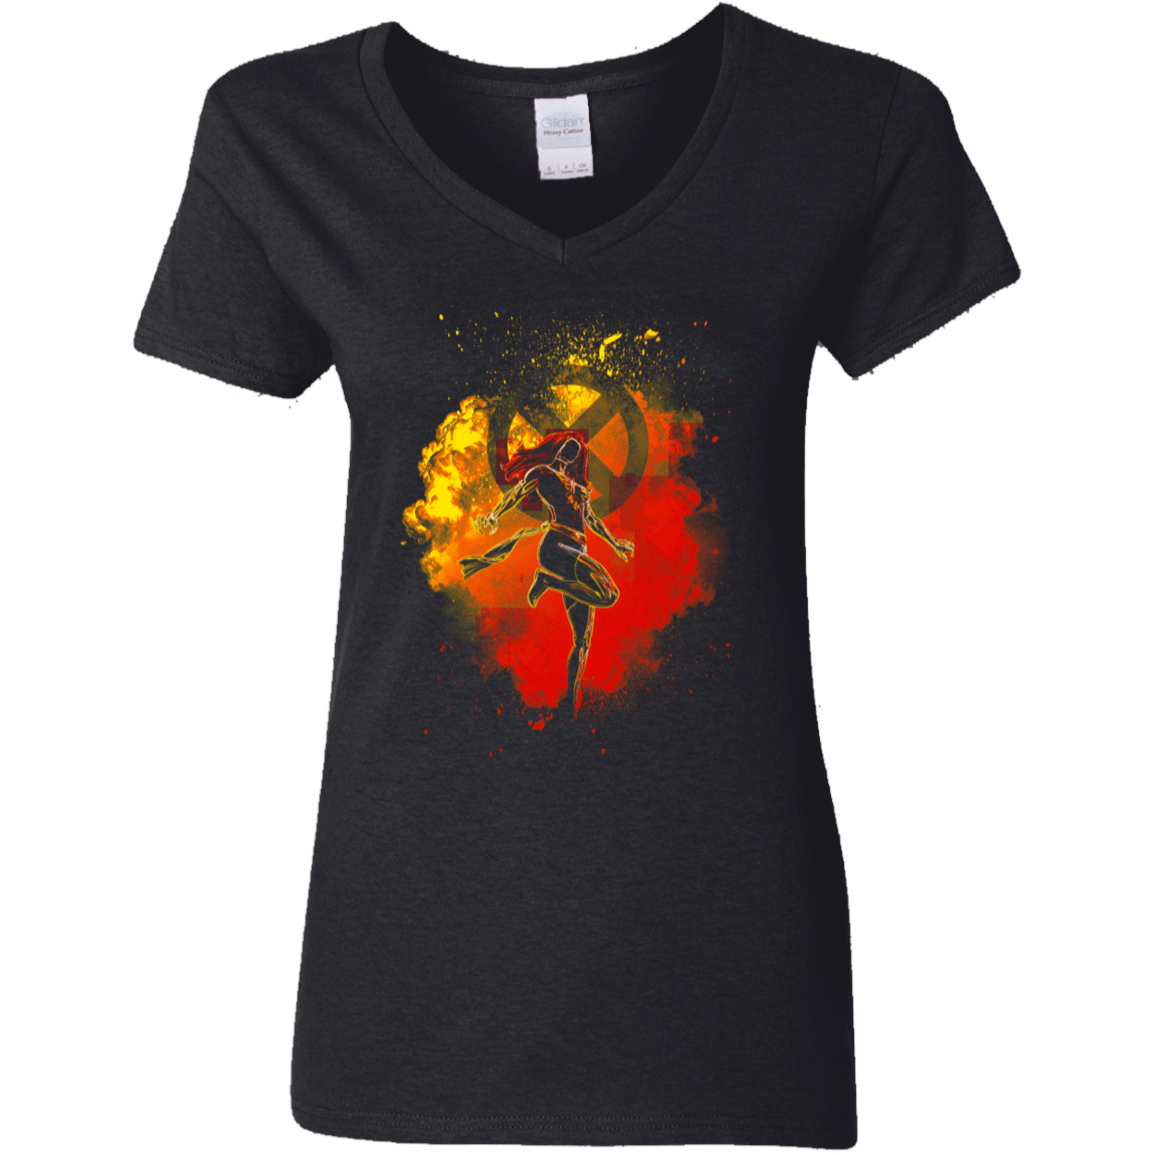 T-Shirts Black / S Phoenix Soul Women's V-Neck T-Shirt